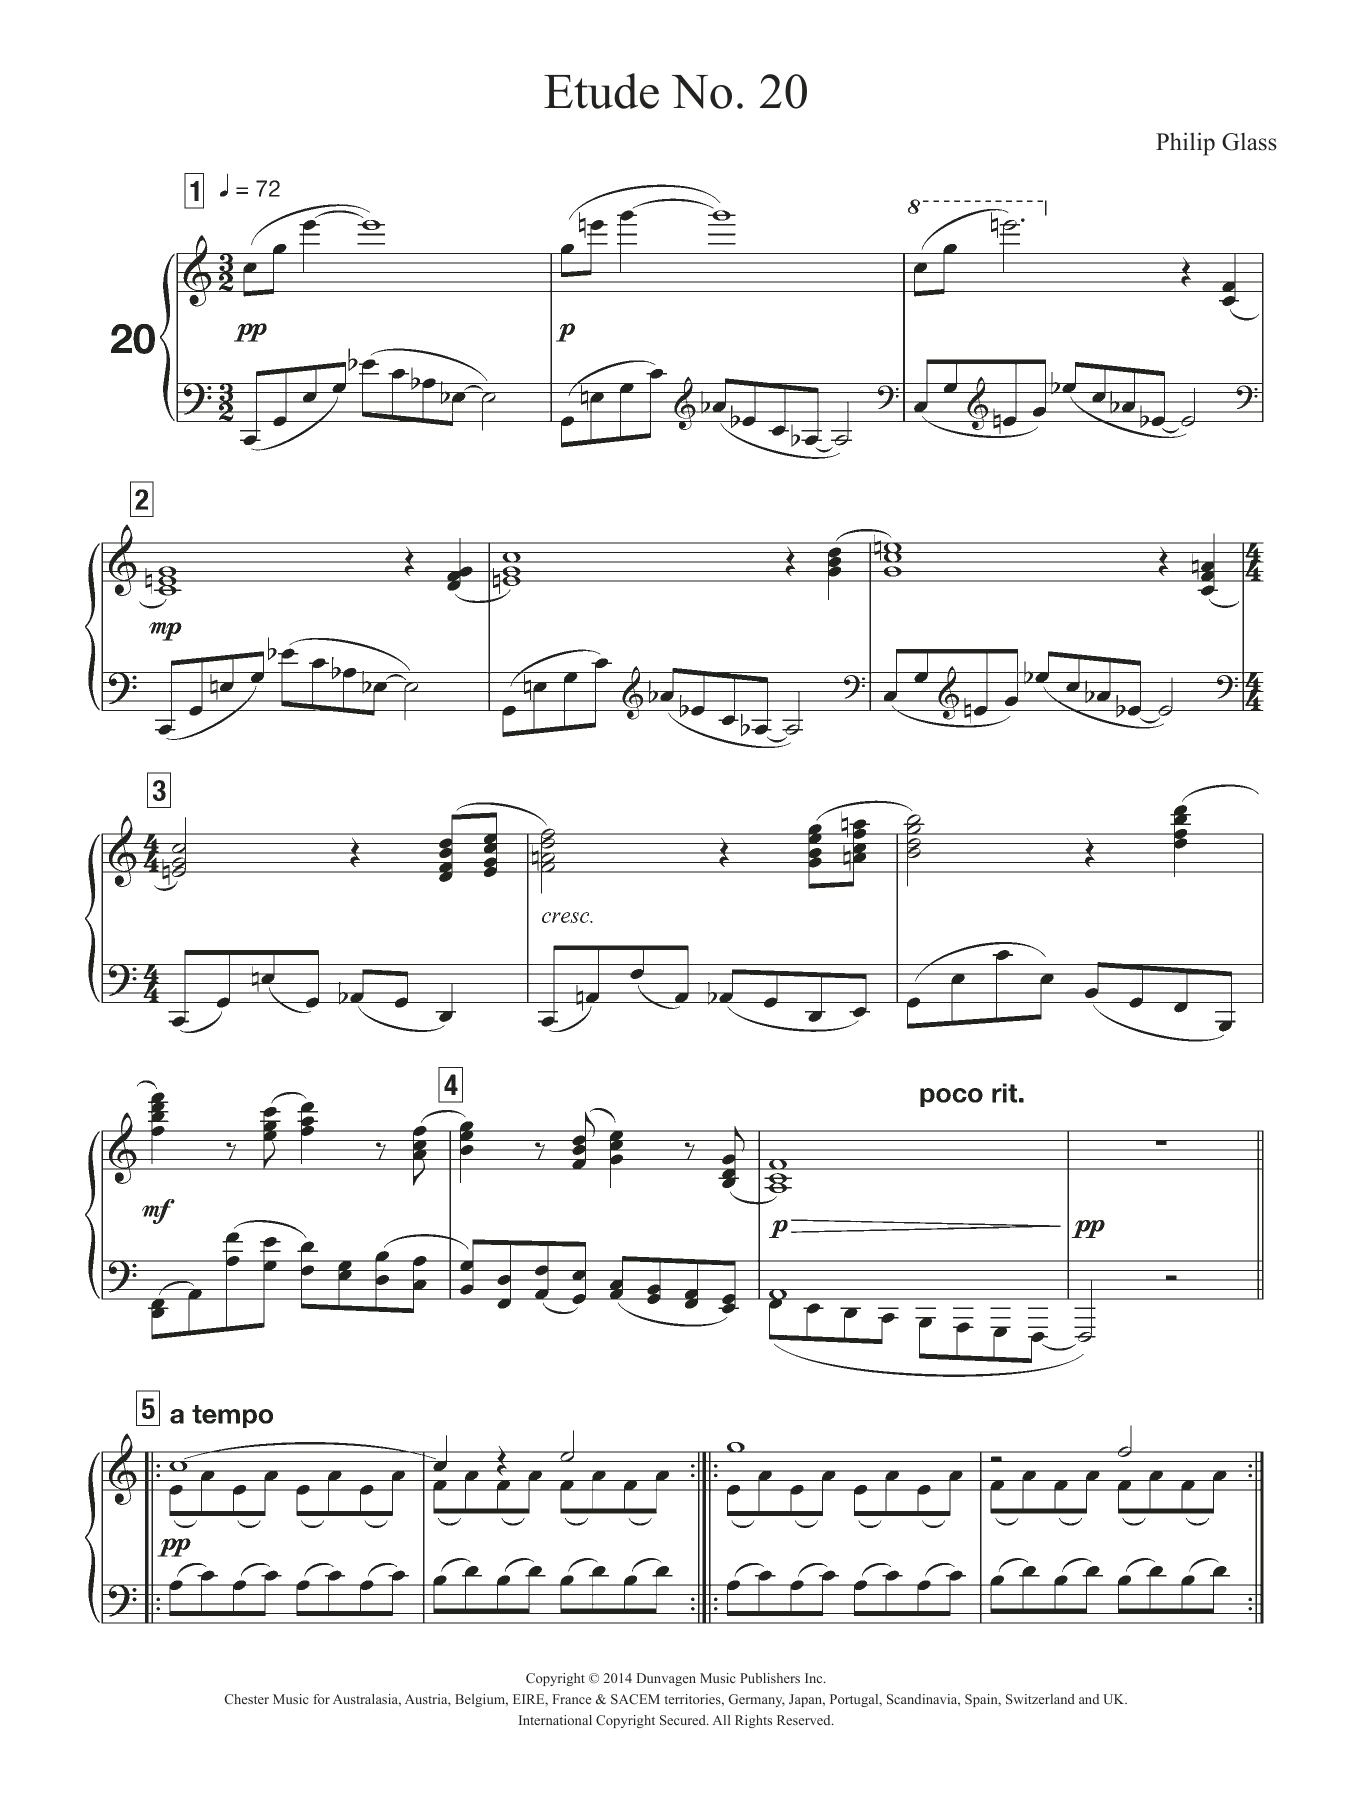 Download Philip Glass Etude No. 20 Sheet Music